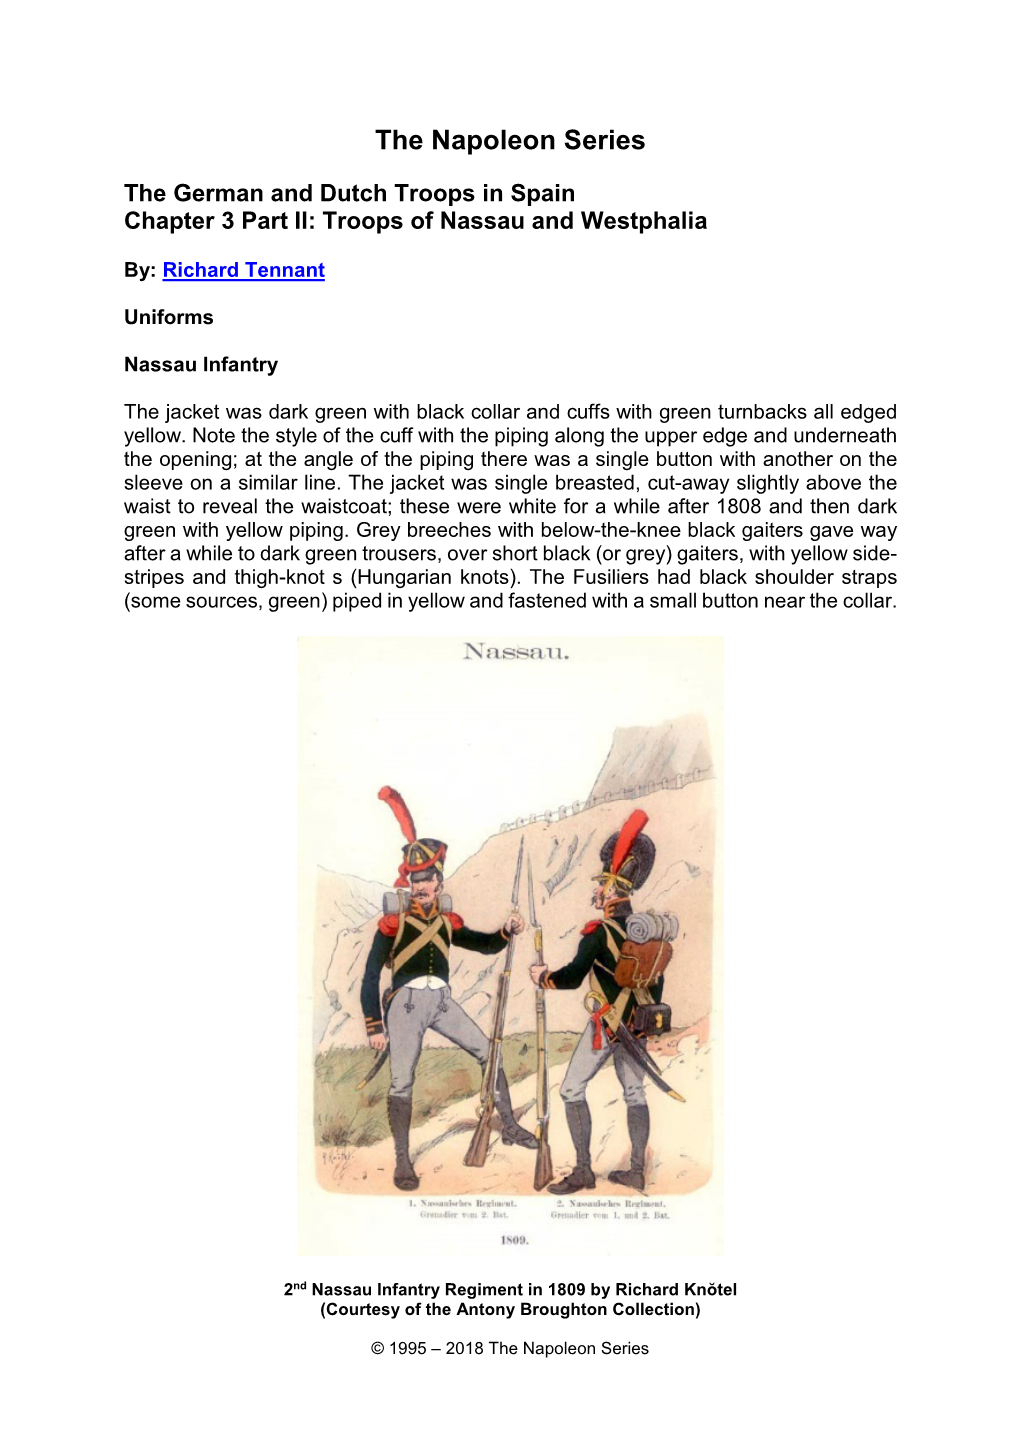 Troops of Nassau and Westphalia